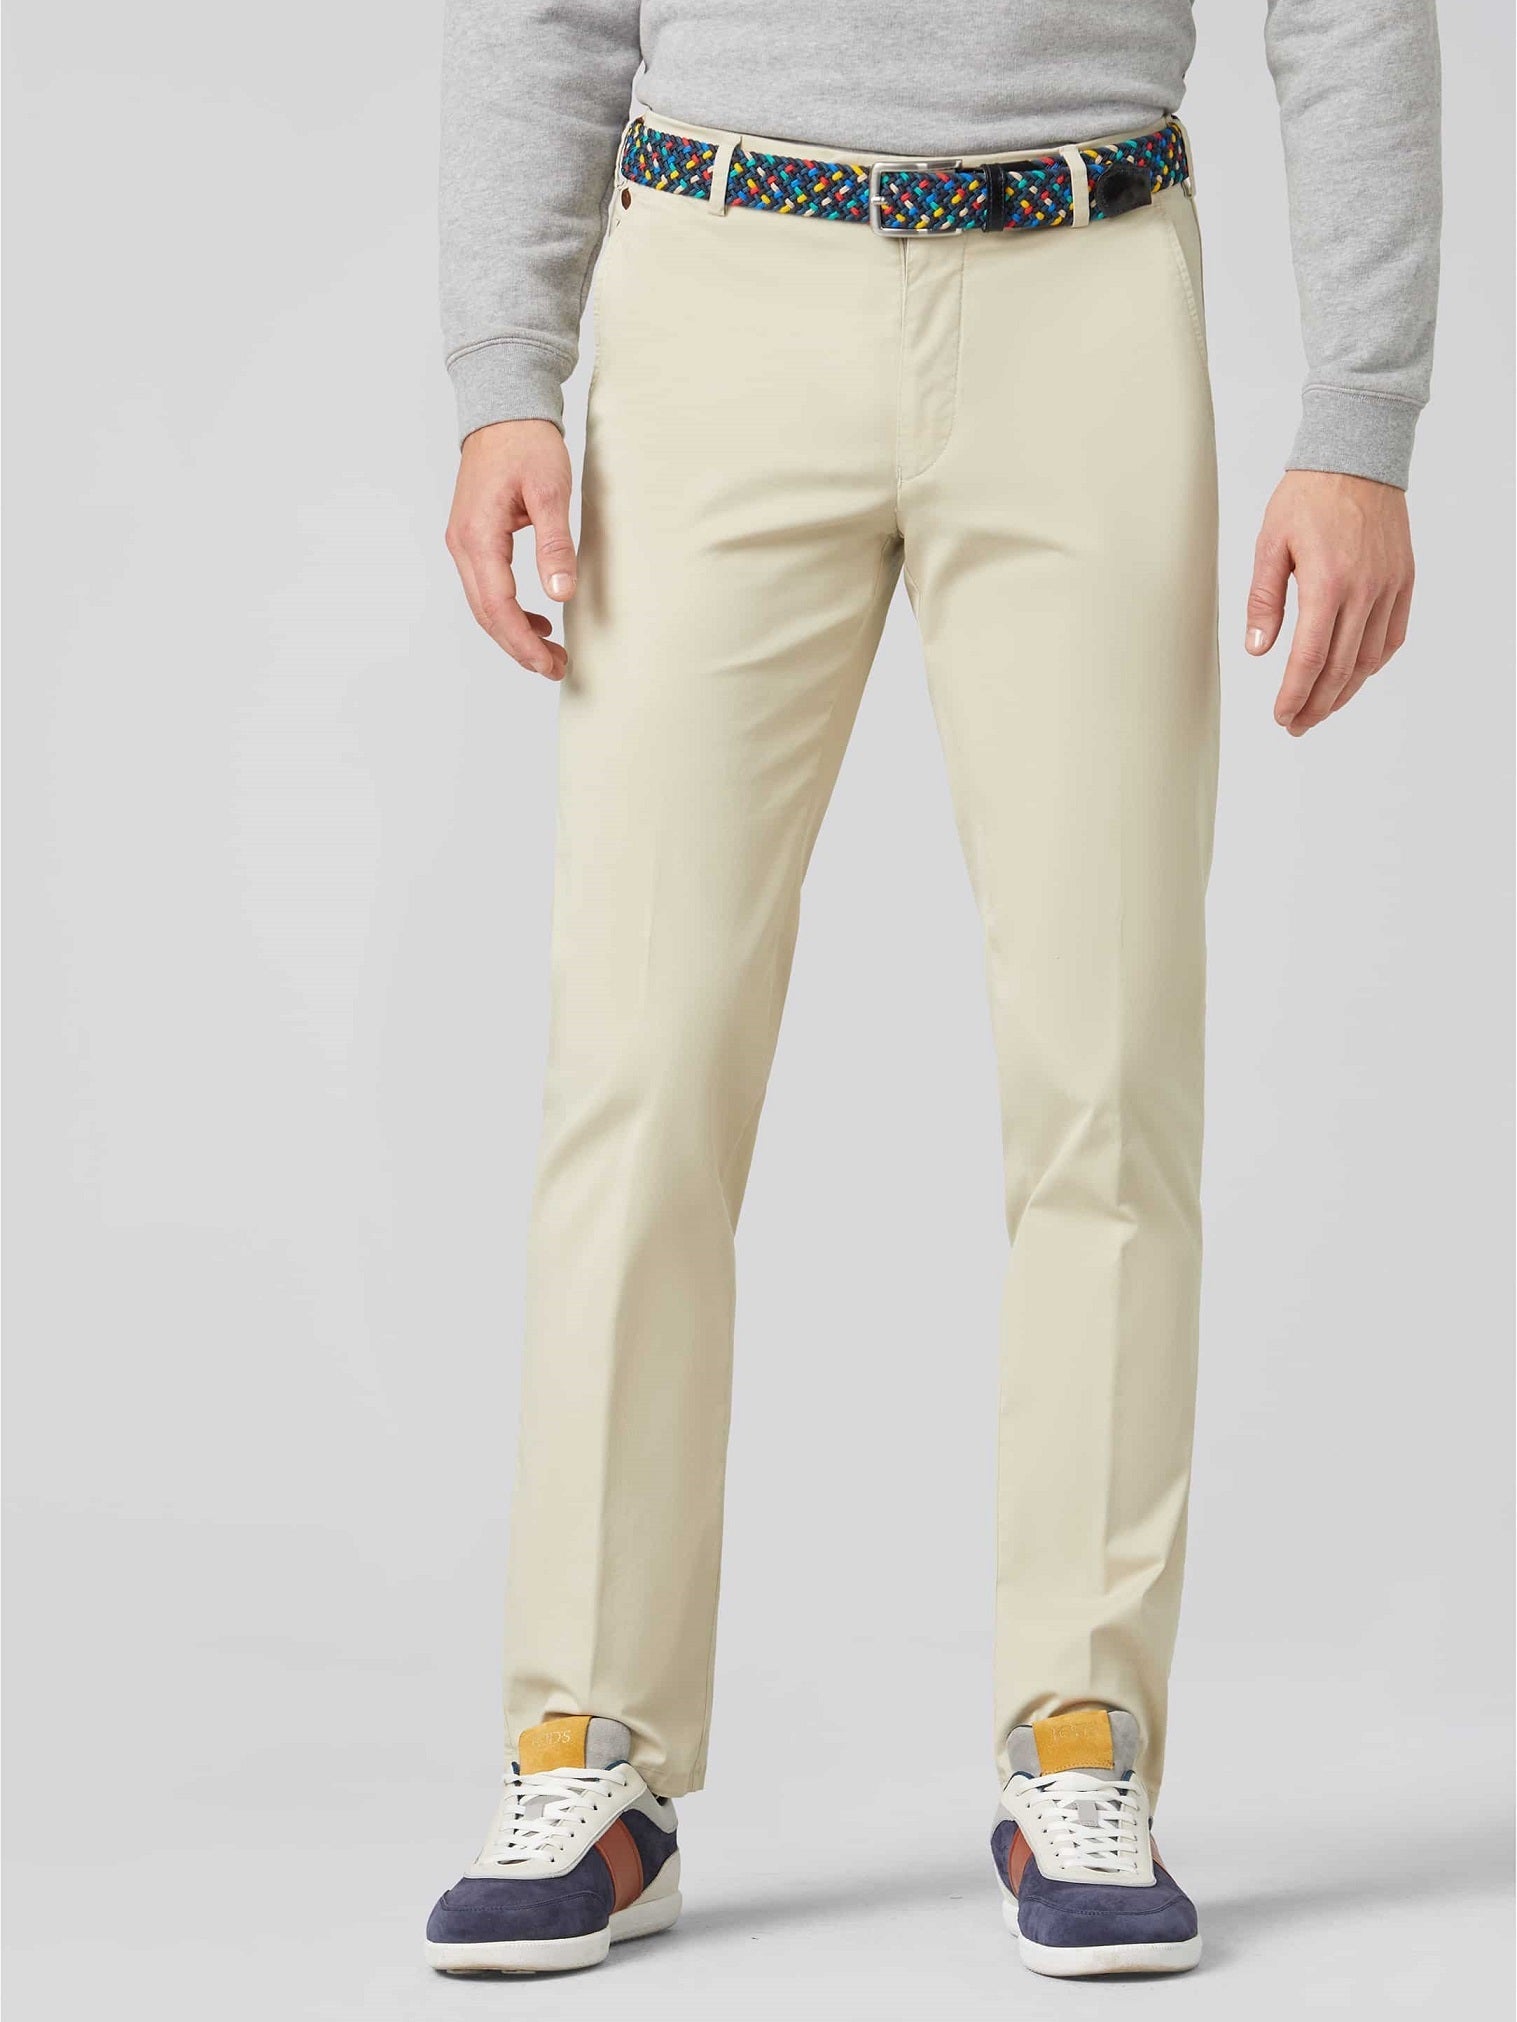 50% OFF - MEYER Trousers - Roma 3001 Summer-Weight Fairtrade Cotton Chinos - Beige - Size: 30 REG